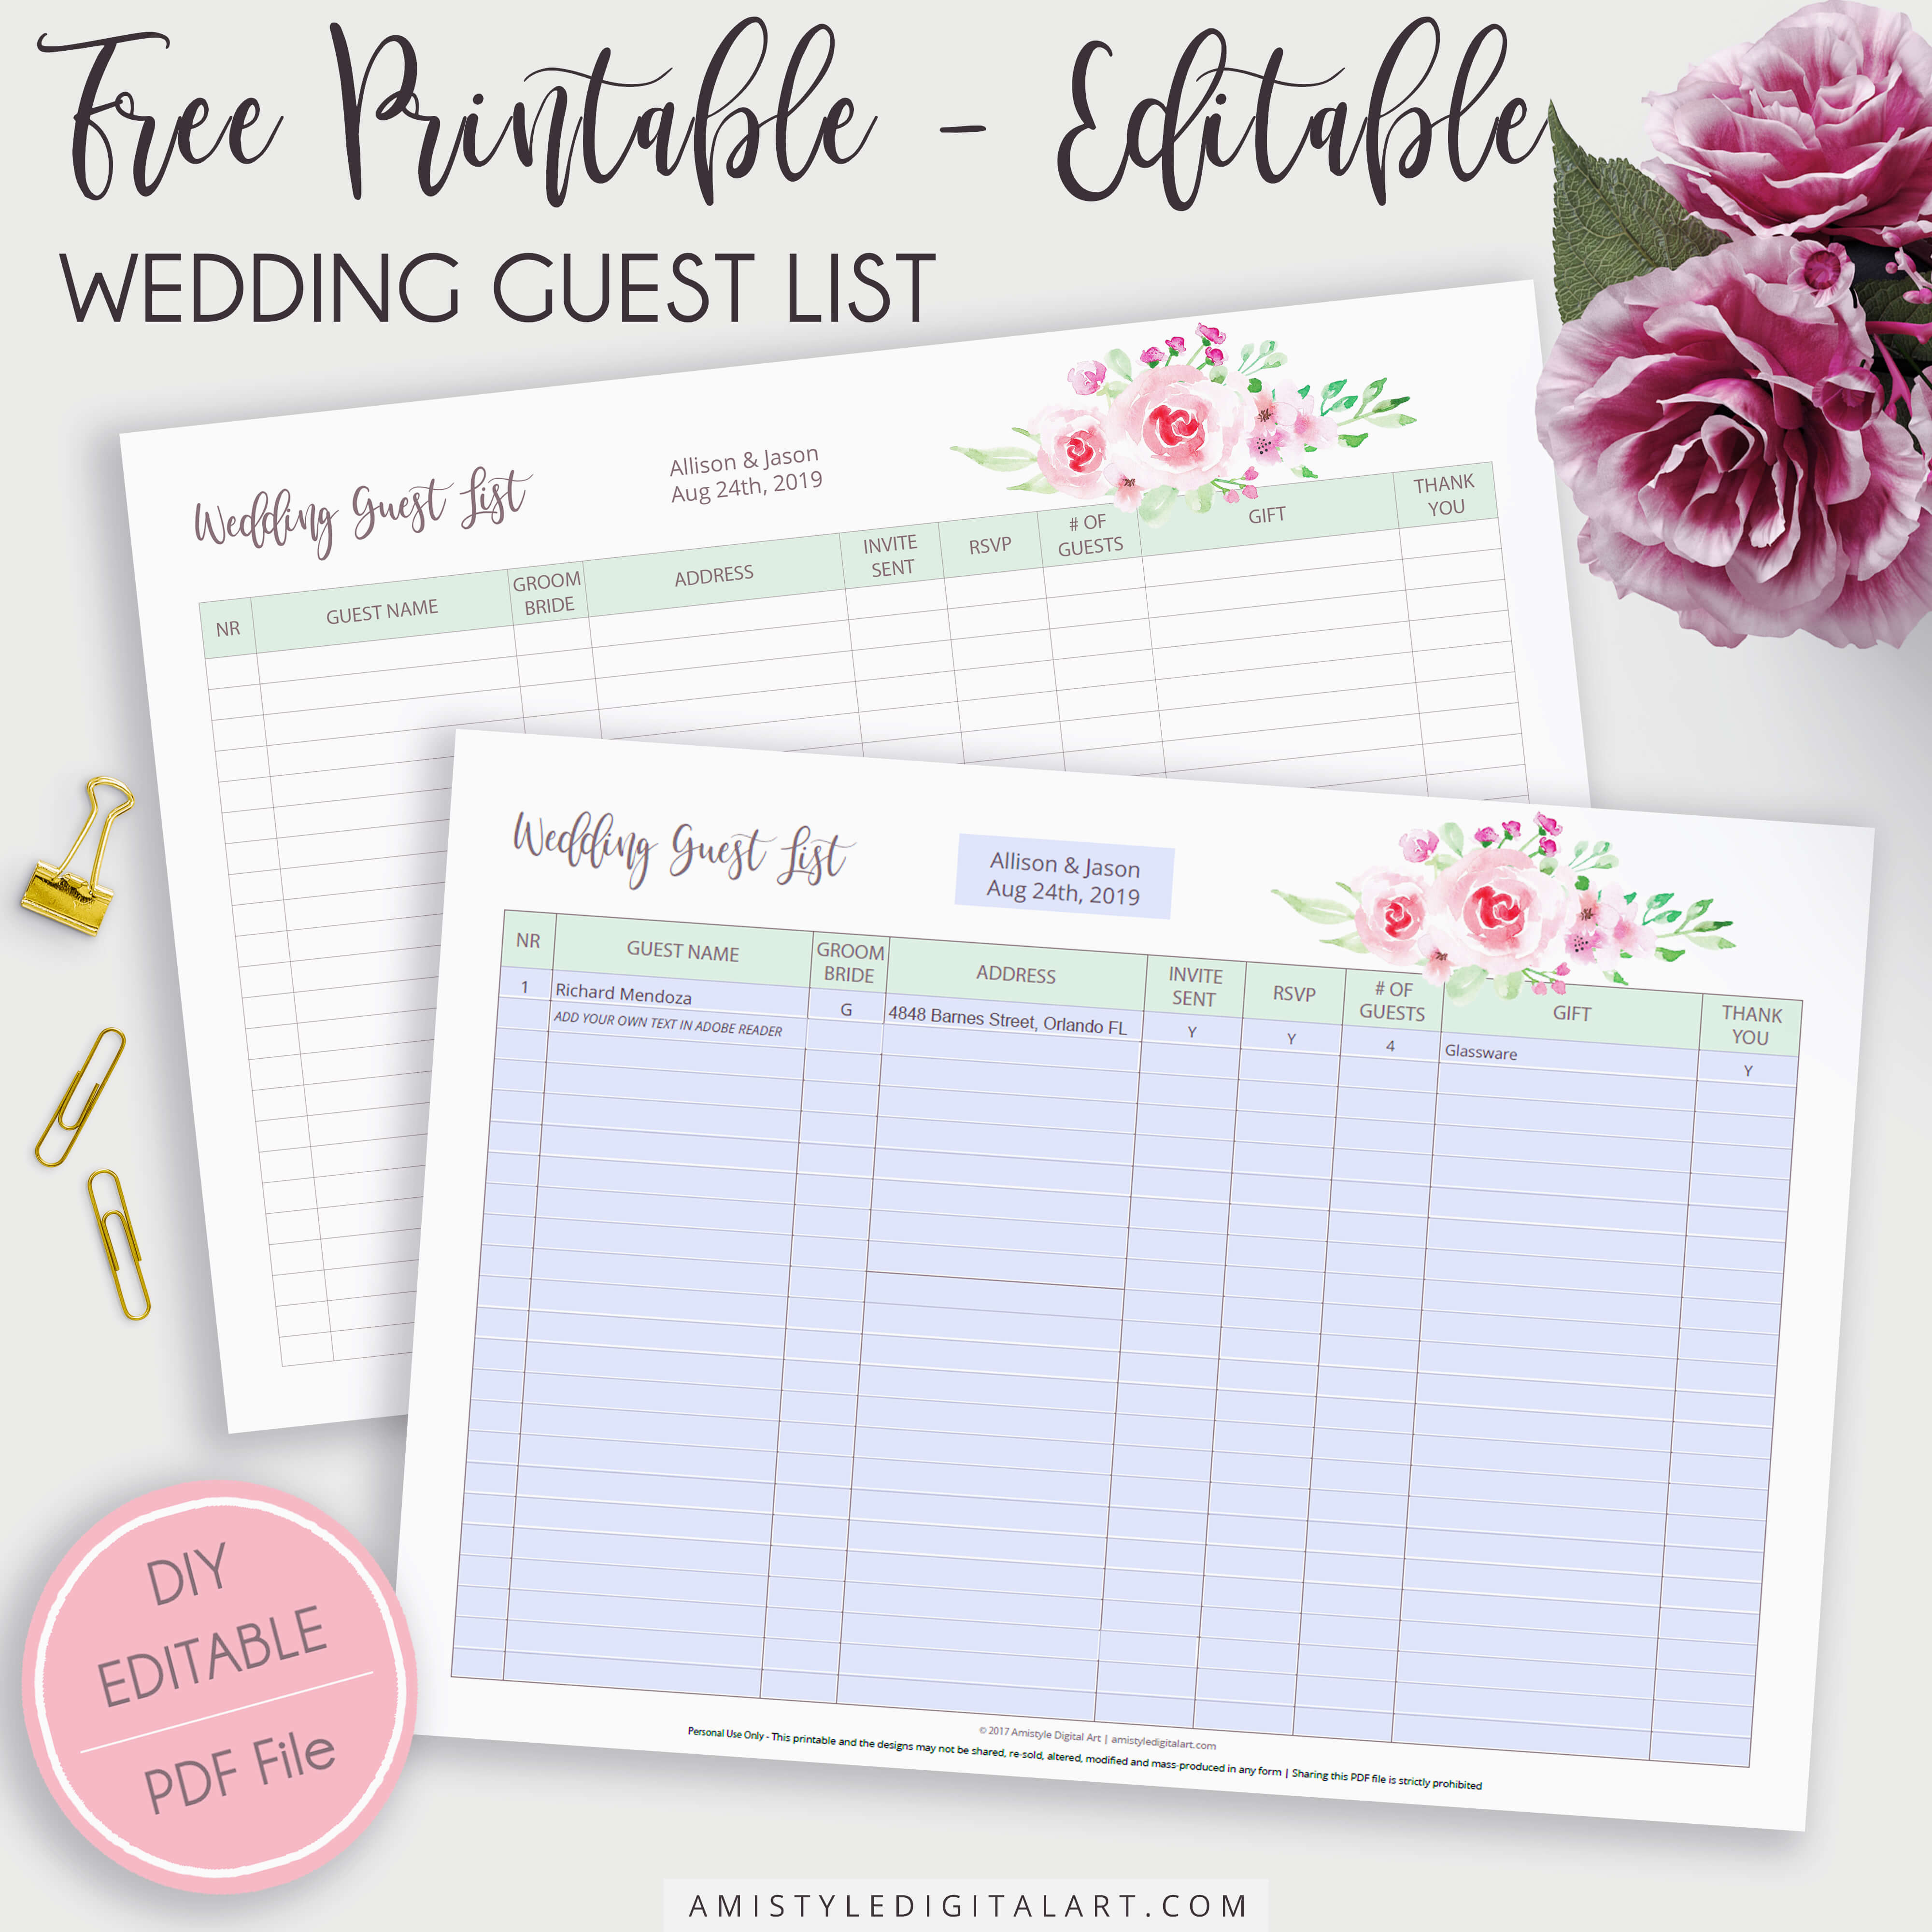 Free Editable Printable Wedding Guest List | Amistyle Digital Art